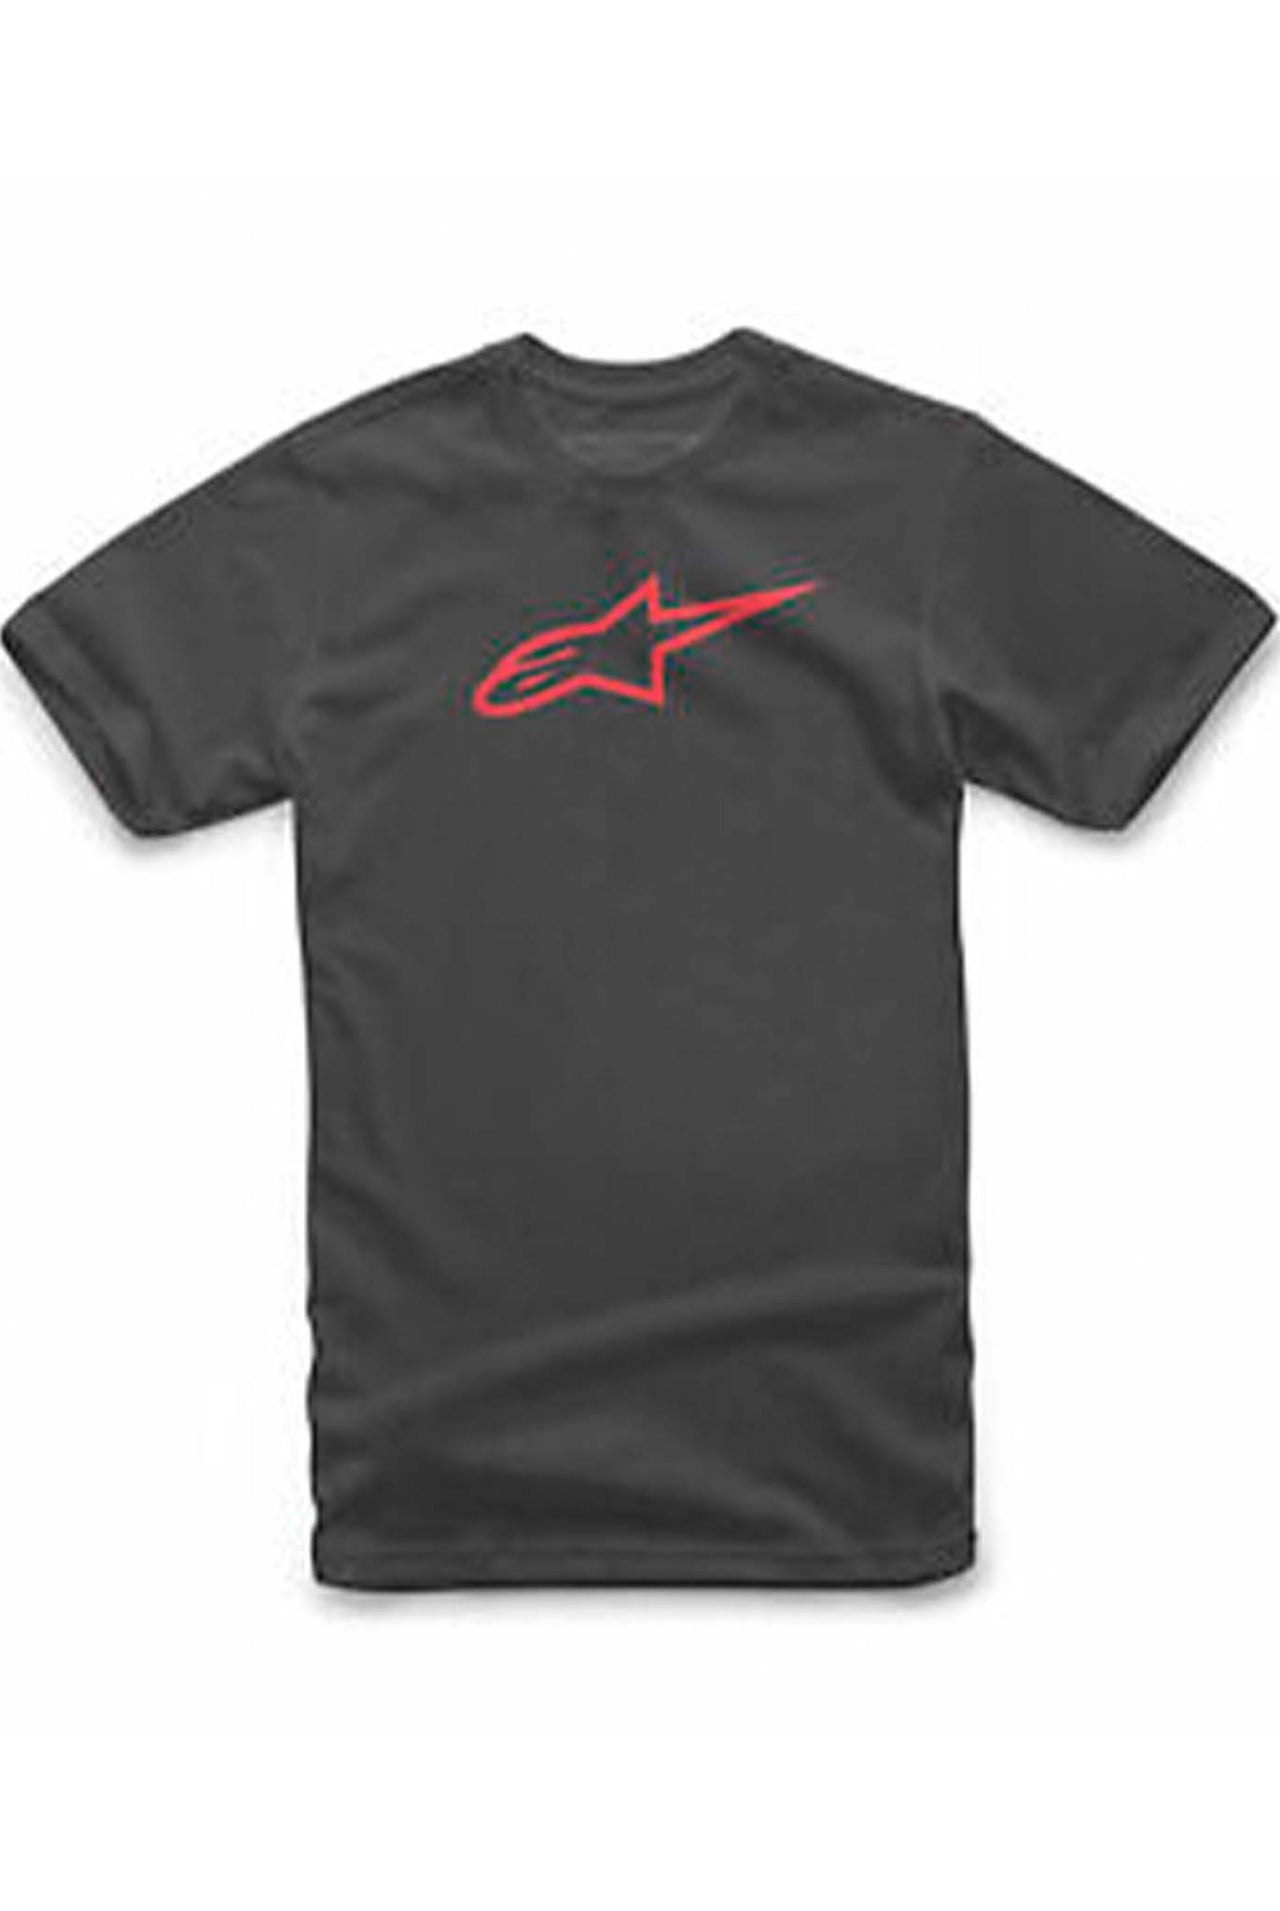 Camiseta Alpinestar Ageless Black/Red